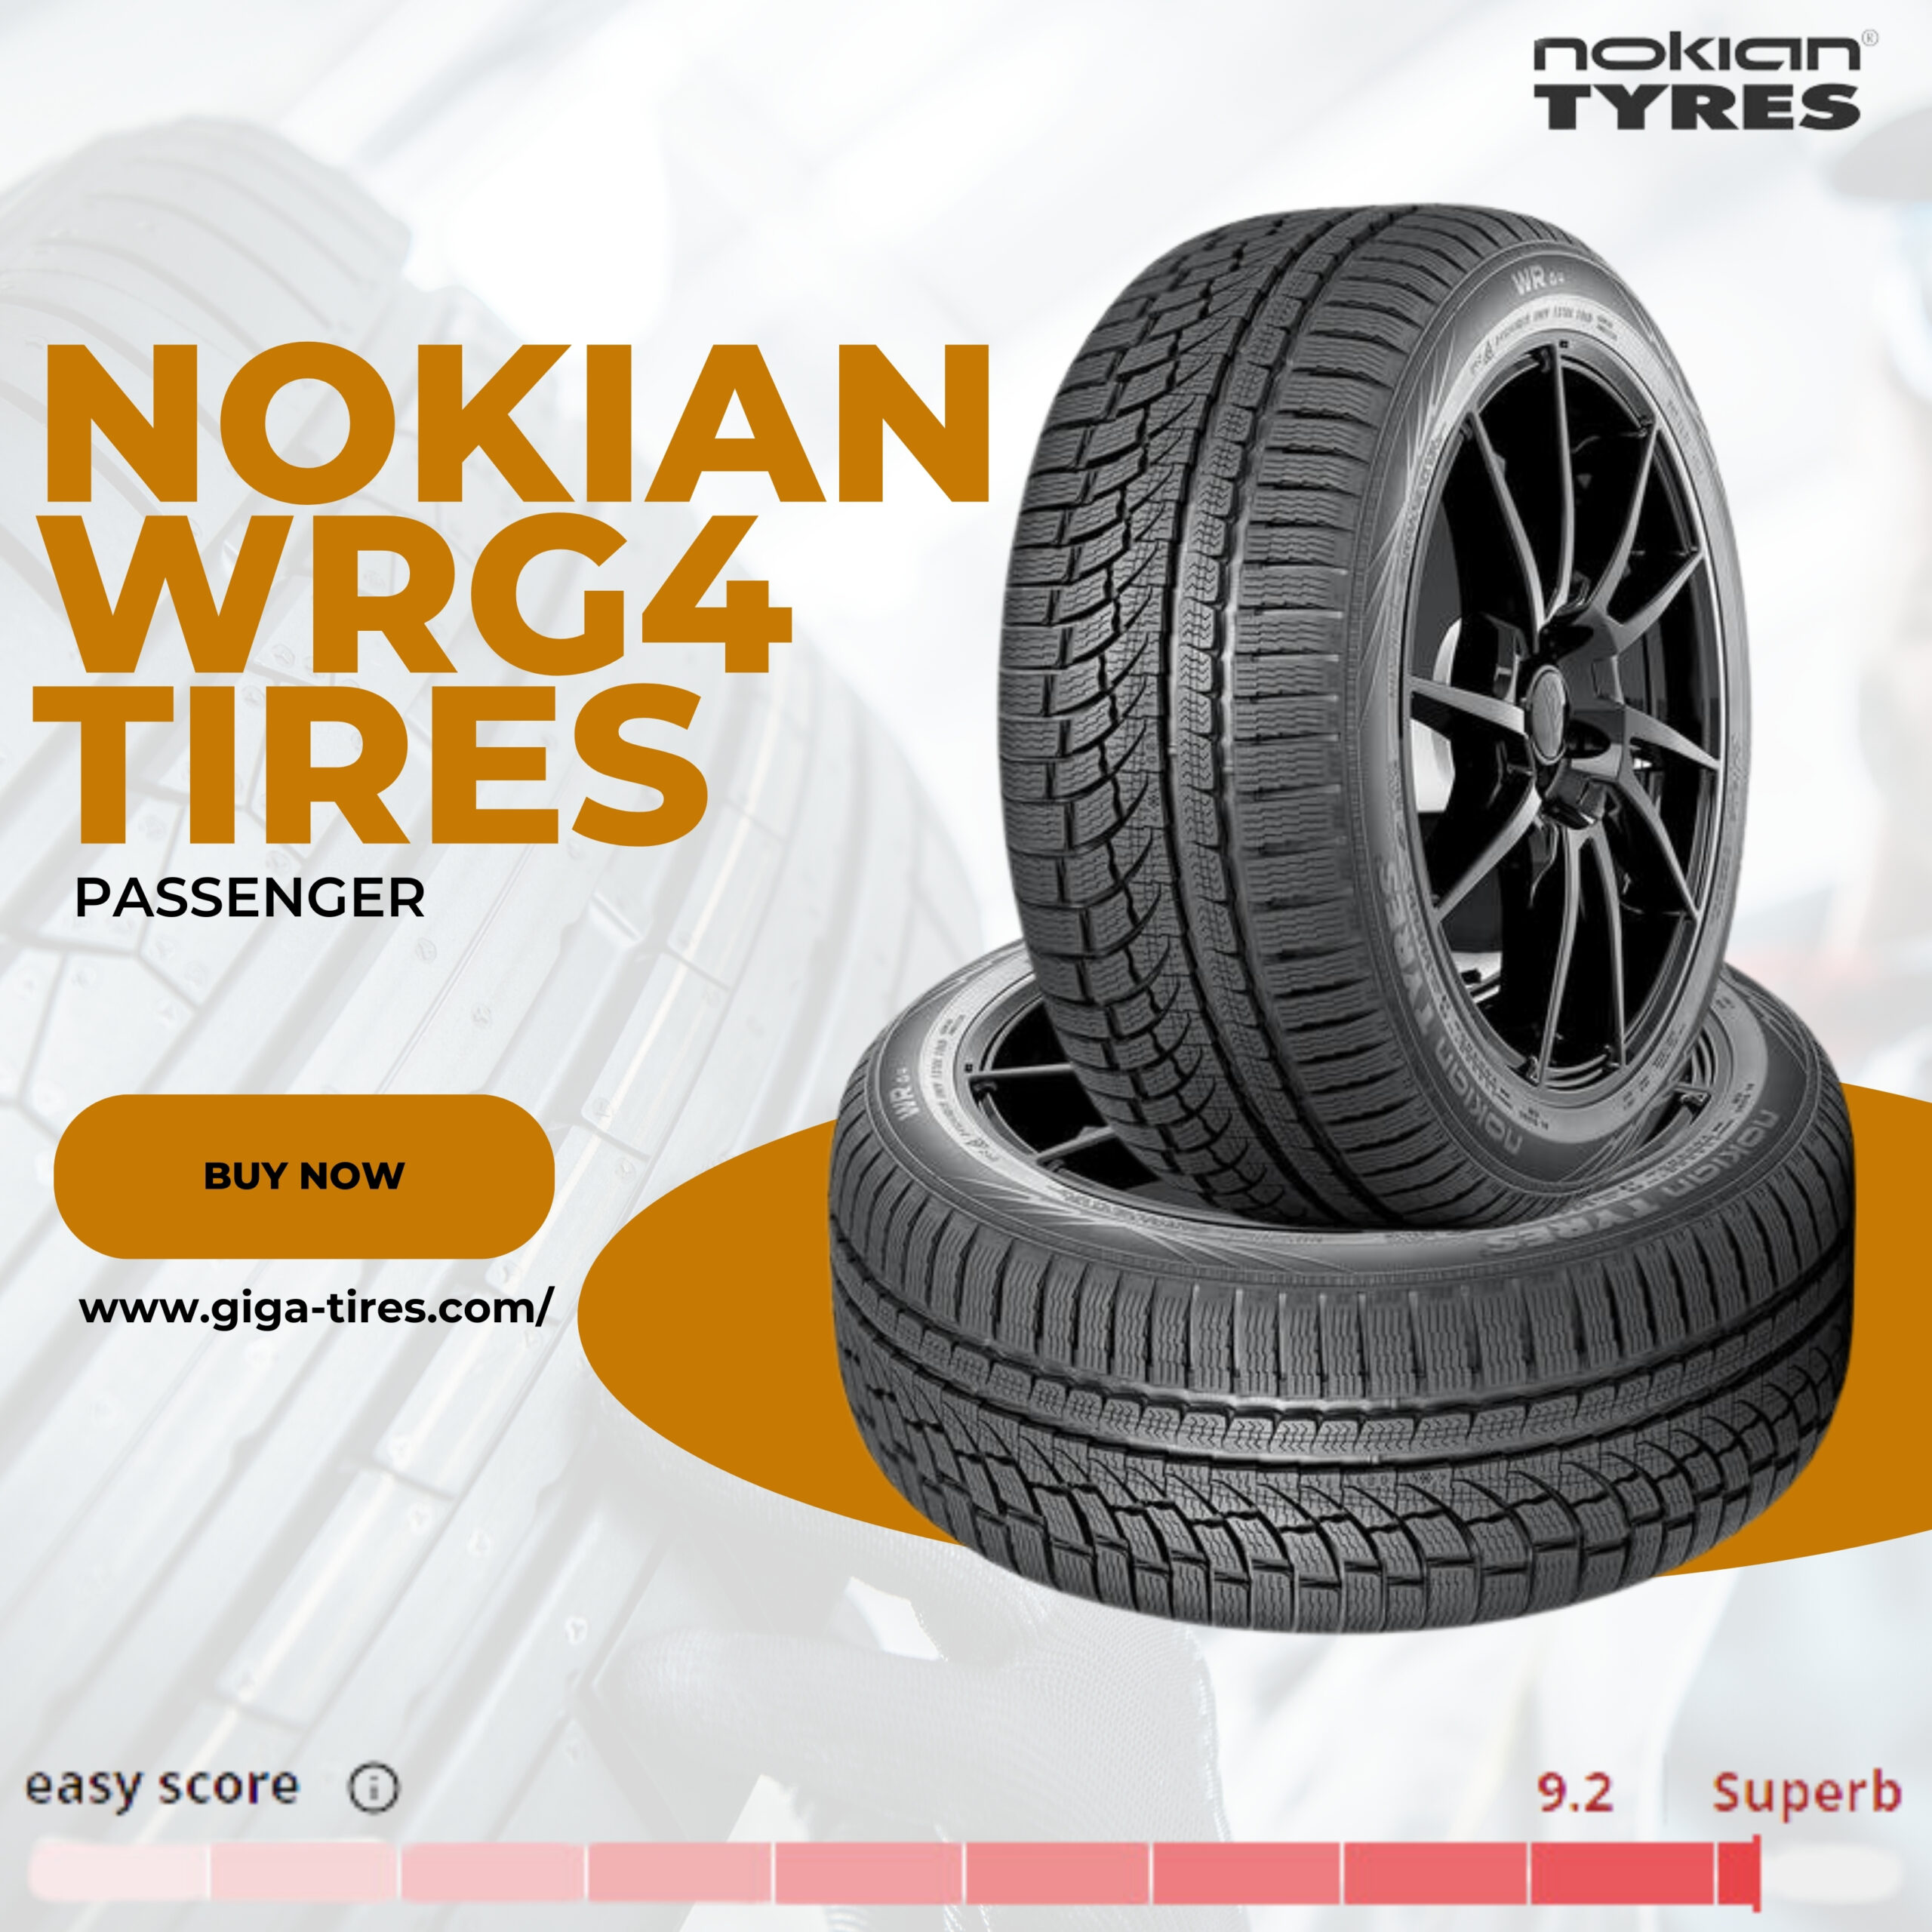 Nokian WRG4 Tires